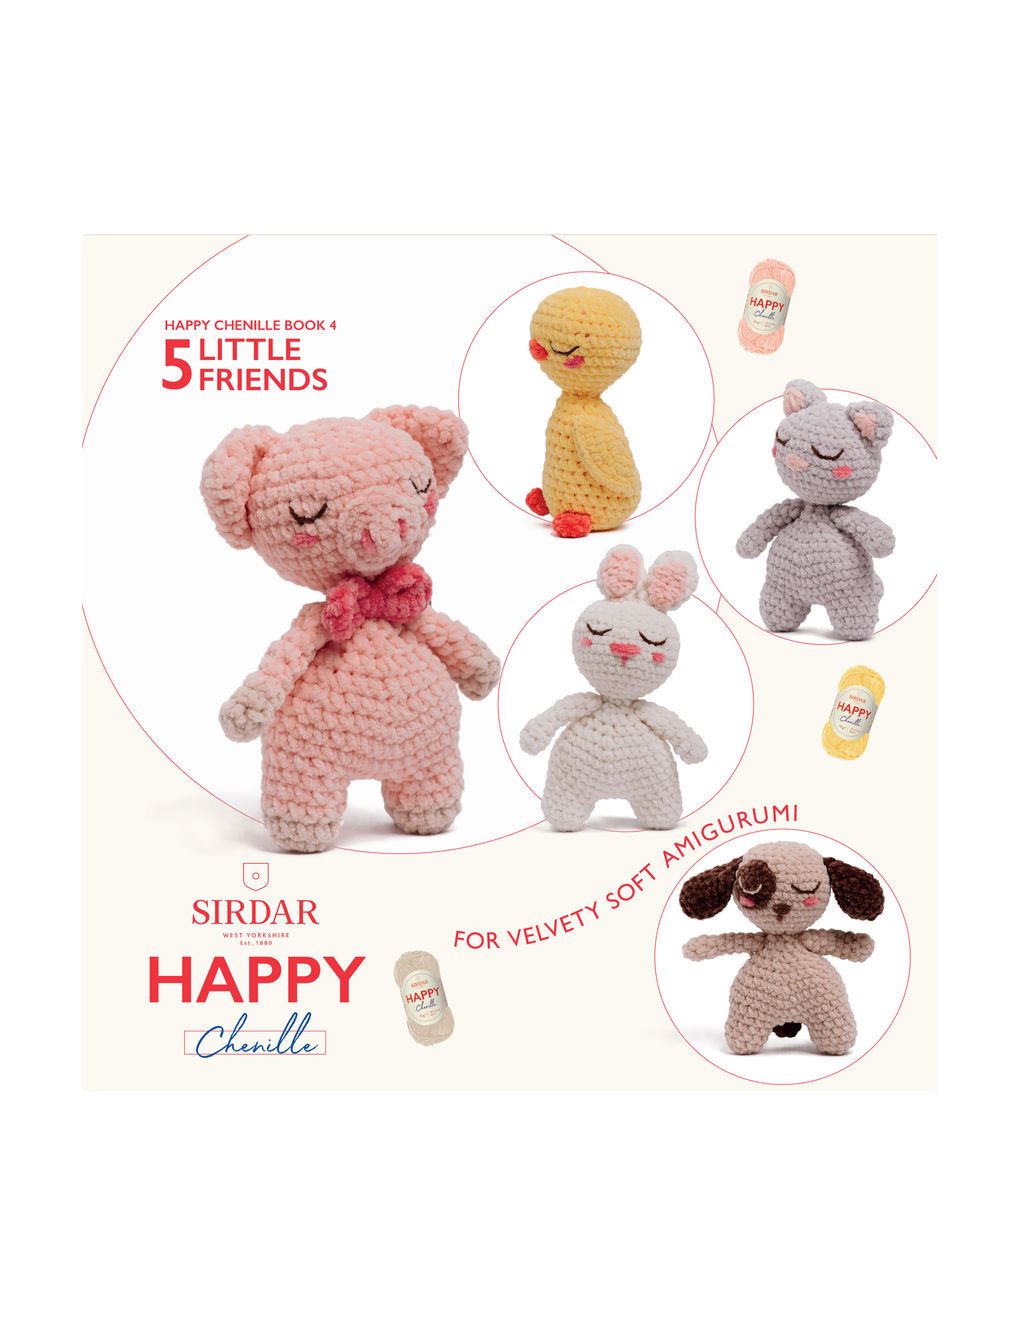 Sirdar Happy Chenille - 5 Little Friends - Amigurumi Pattern Book